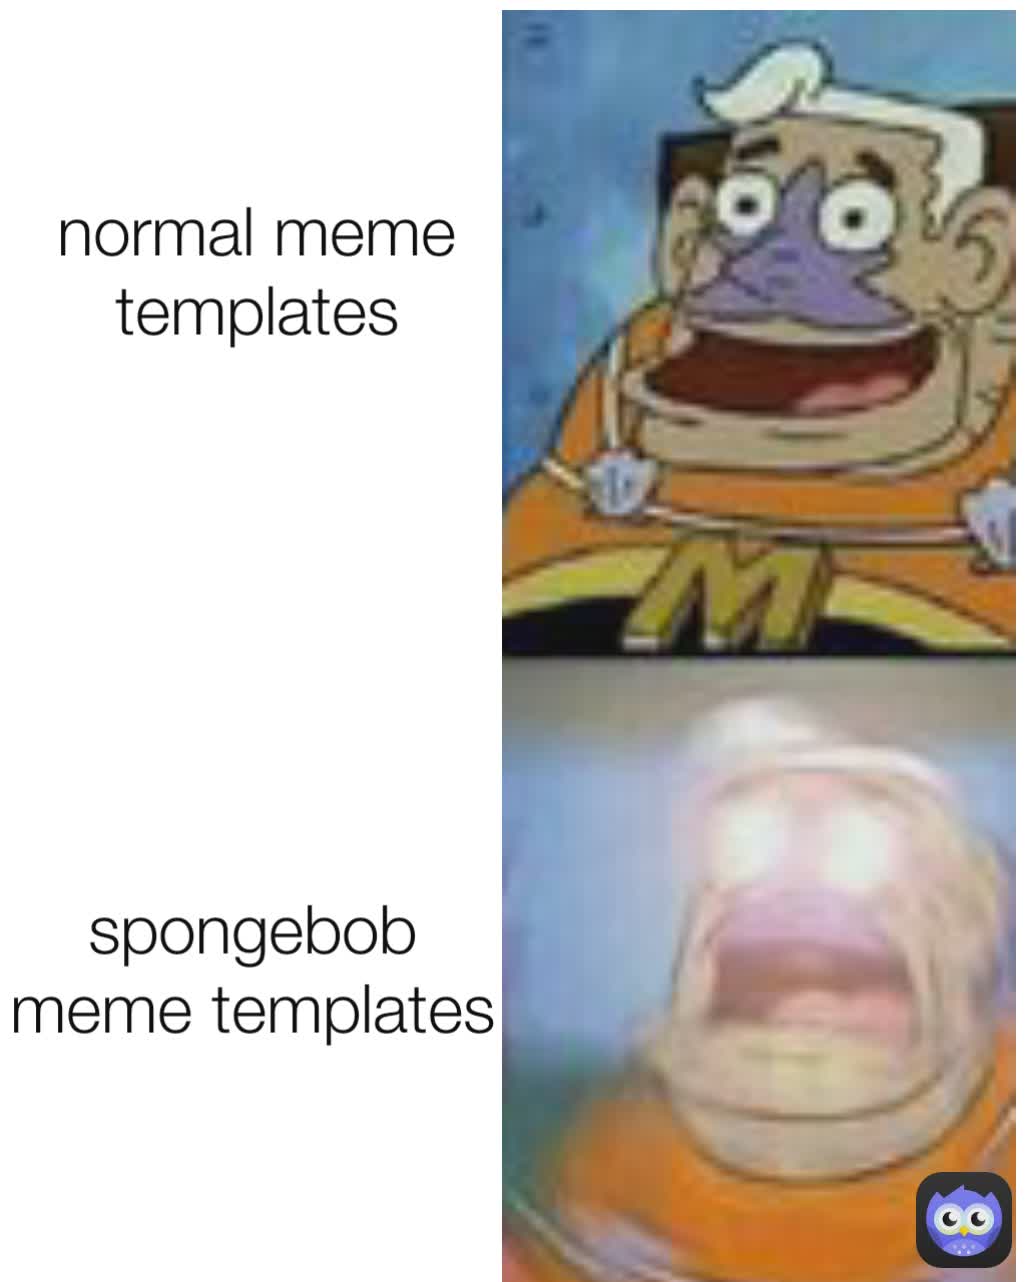 spongebob meme templates normal meme templates
